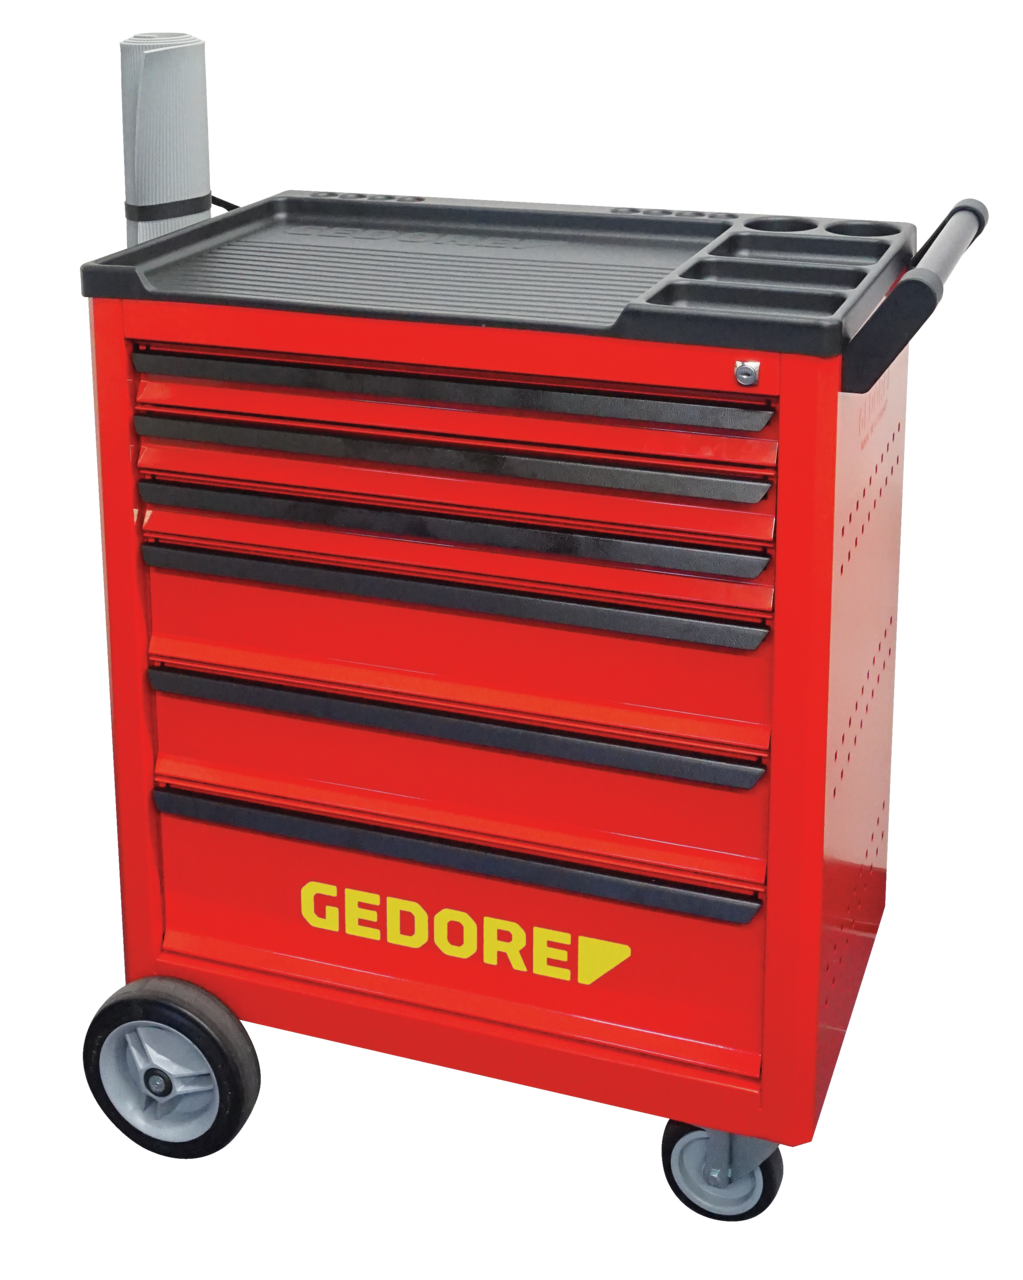 GEDORE KL-4600-200 - Chariot à outils avec assortiment d'outils isolés VDE (3415740)